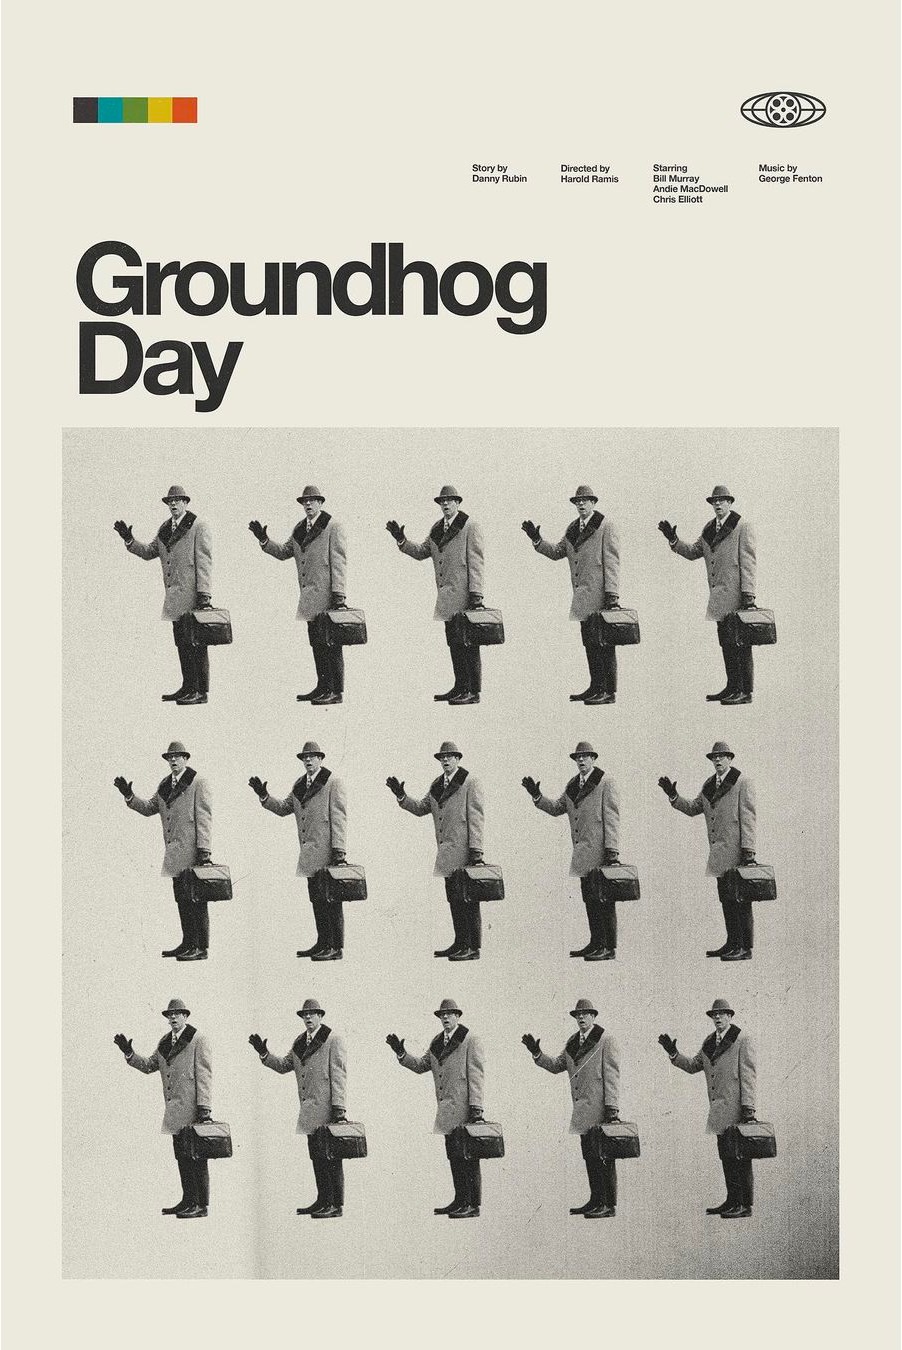 retro modern movie poster for Groundhog Day